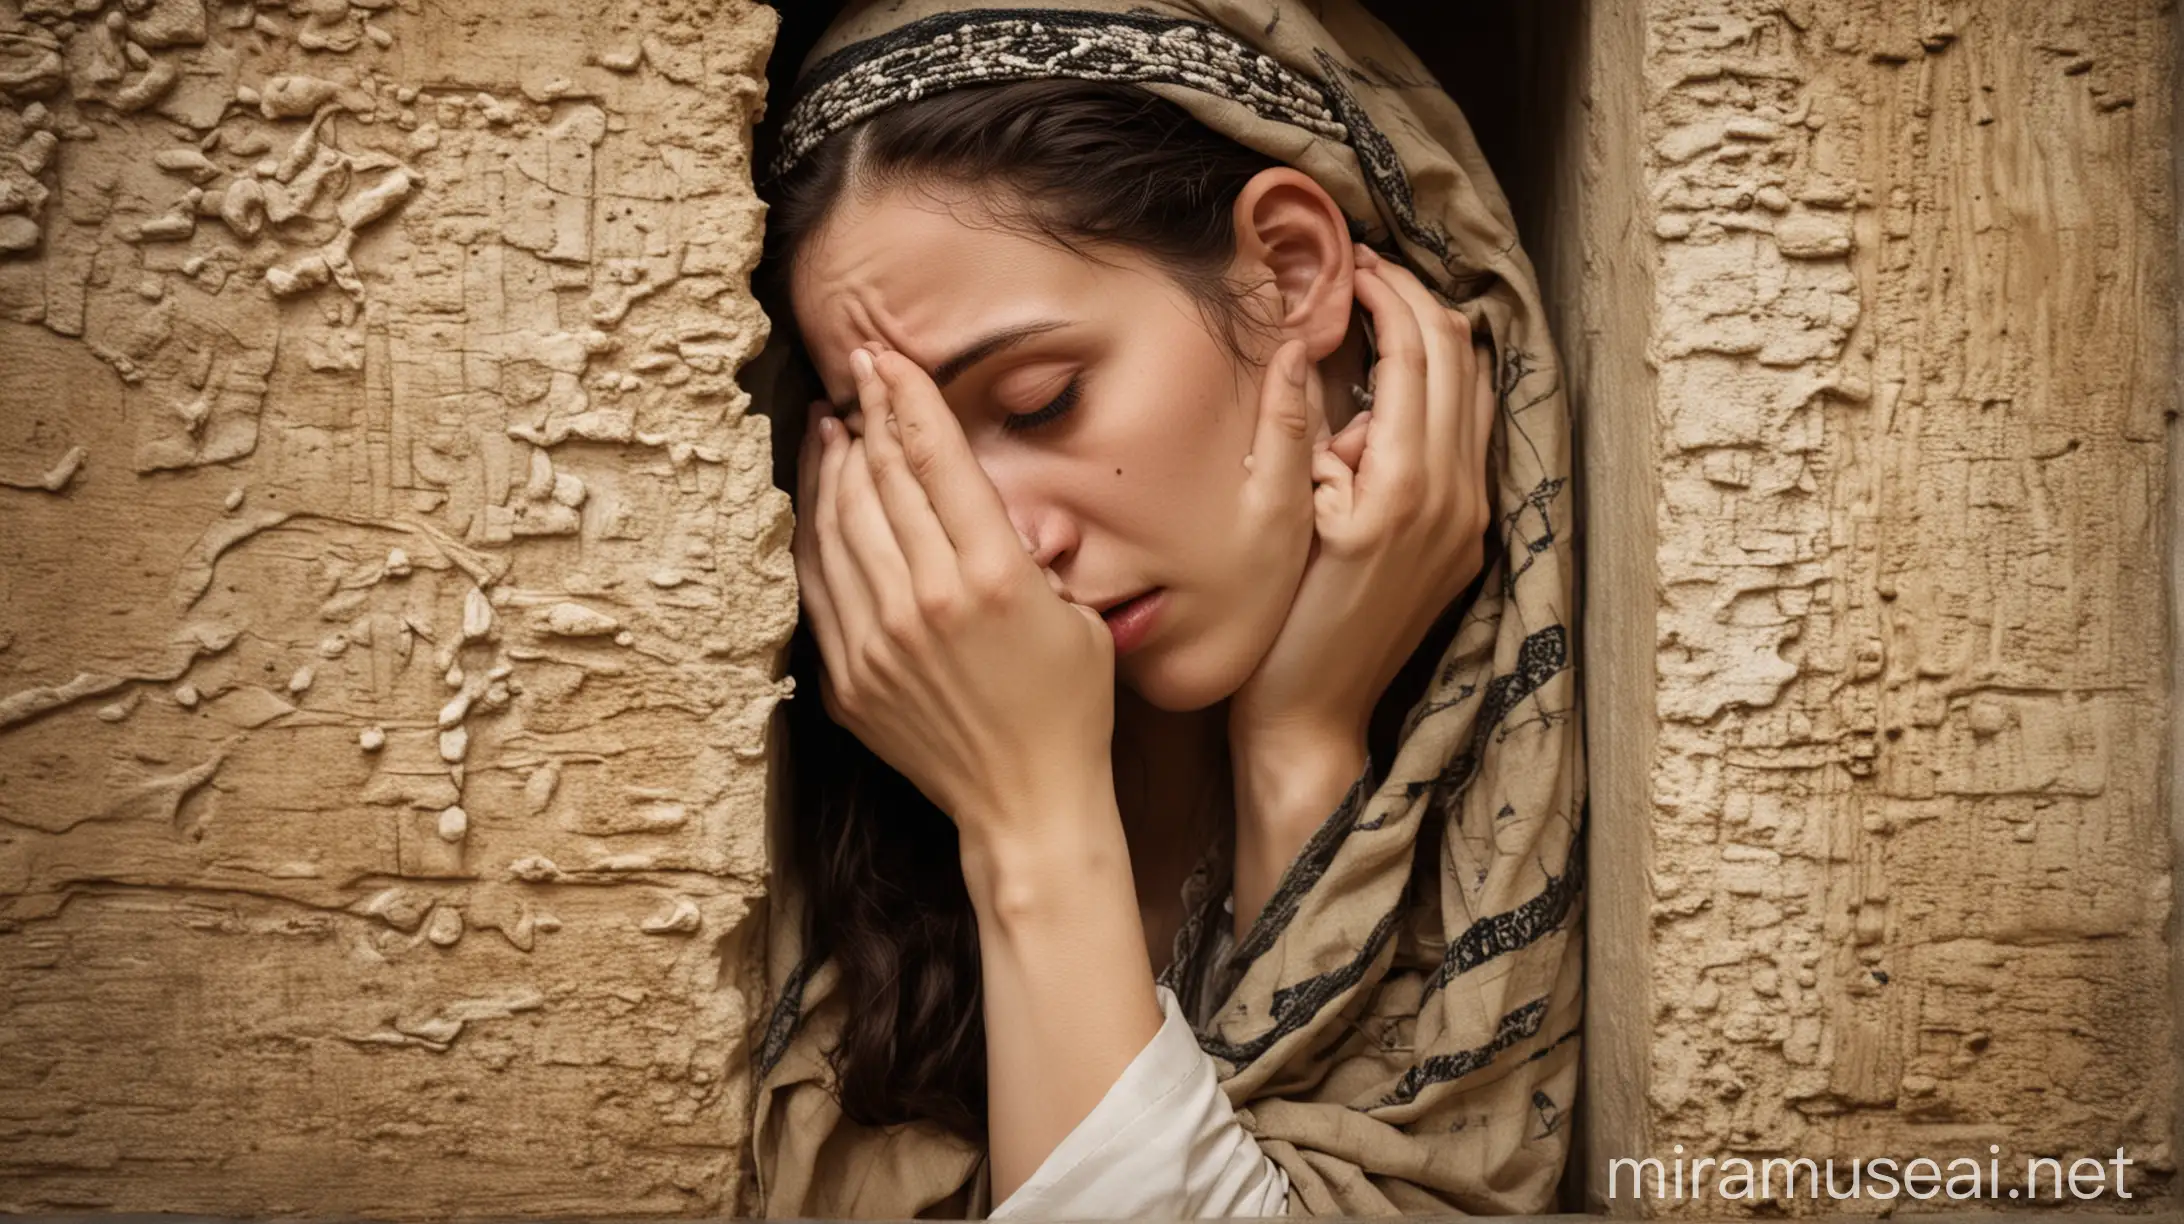 Sorrowful Jewish Woman in Ancient Times